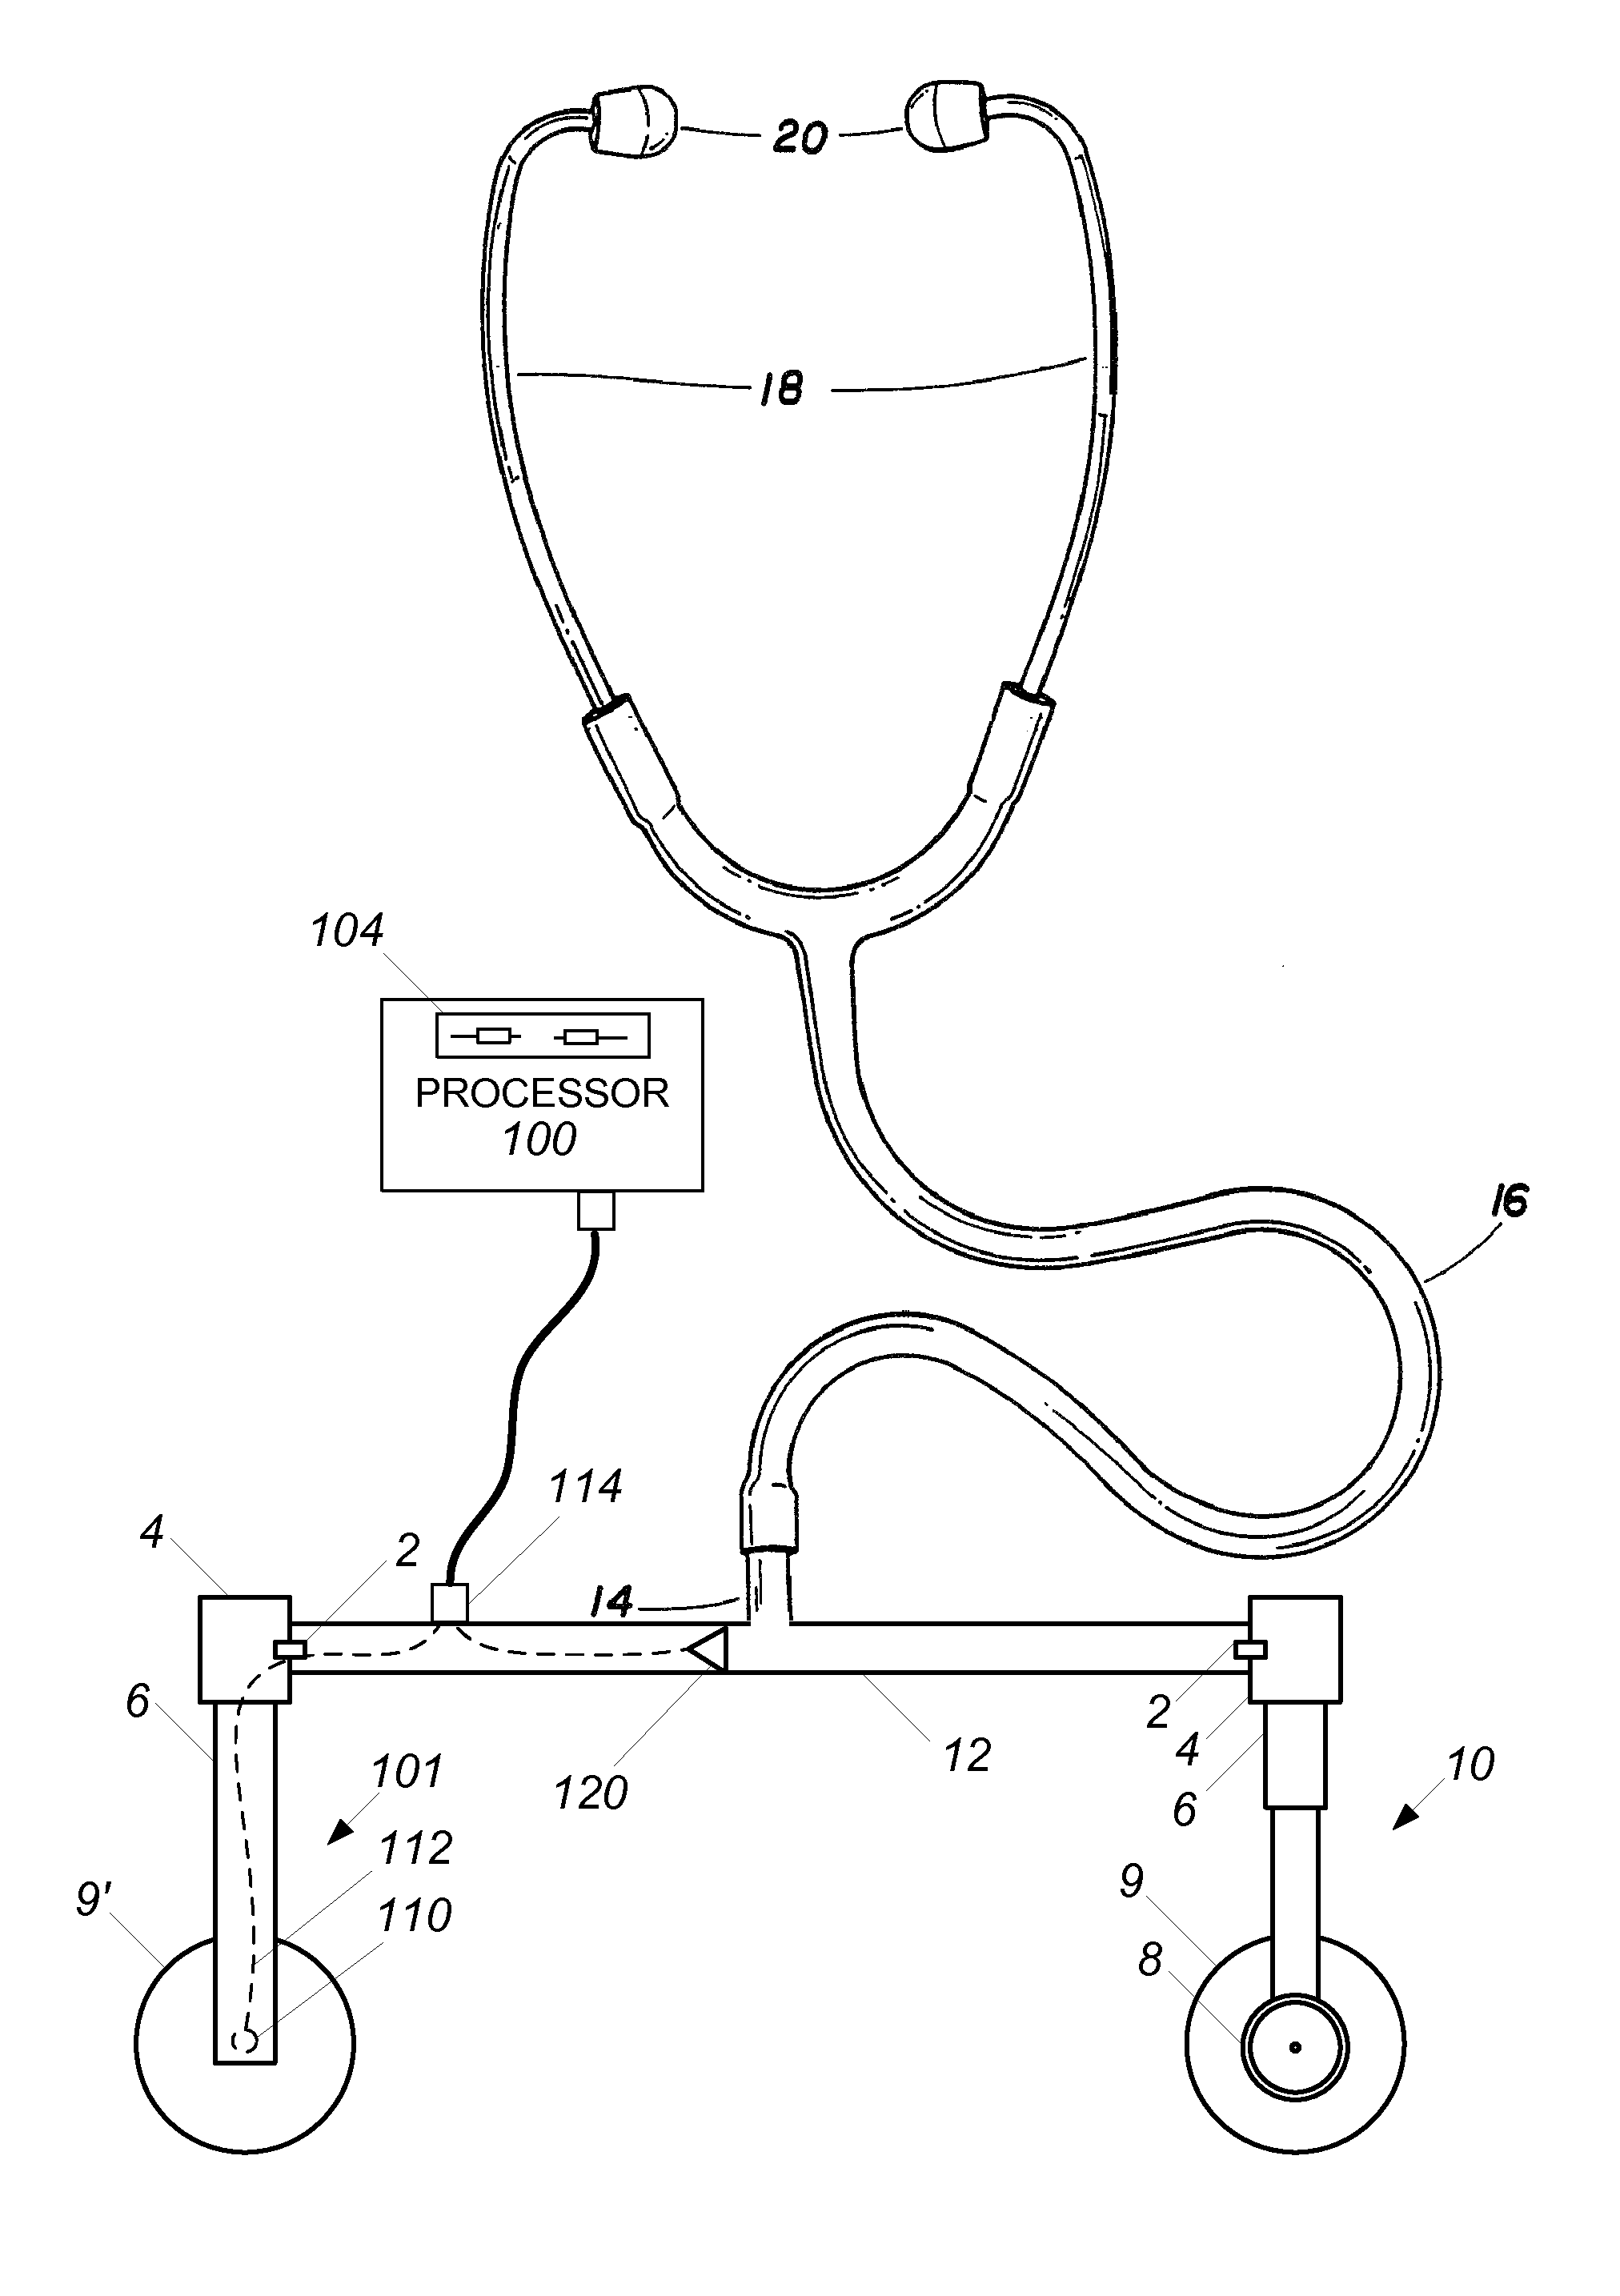 Dual-sensor stethoscope with electronic sensor